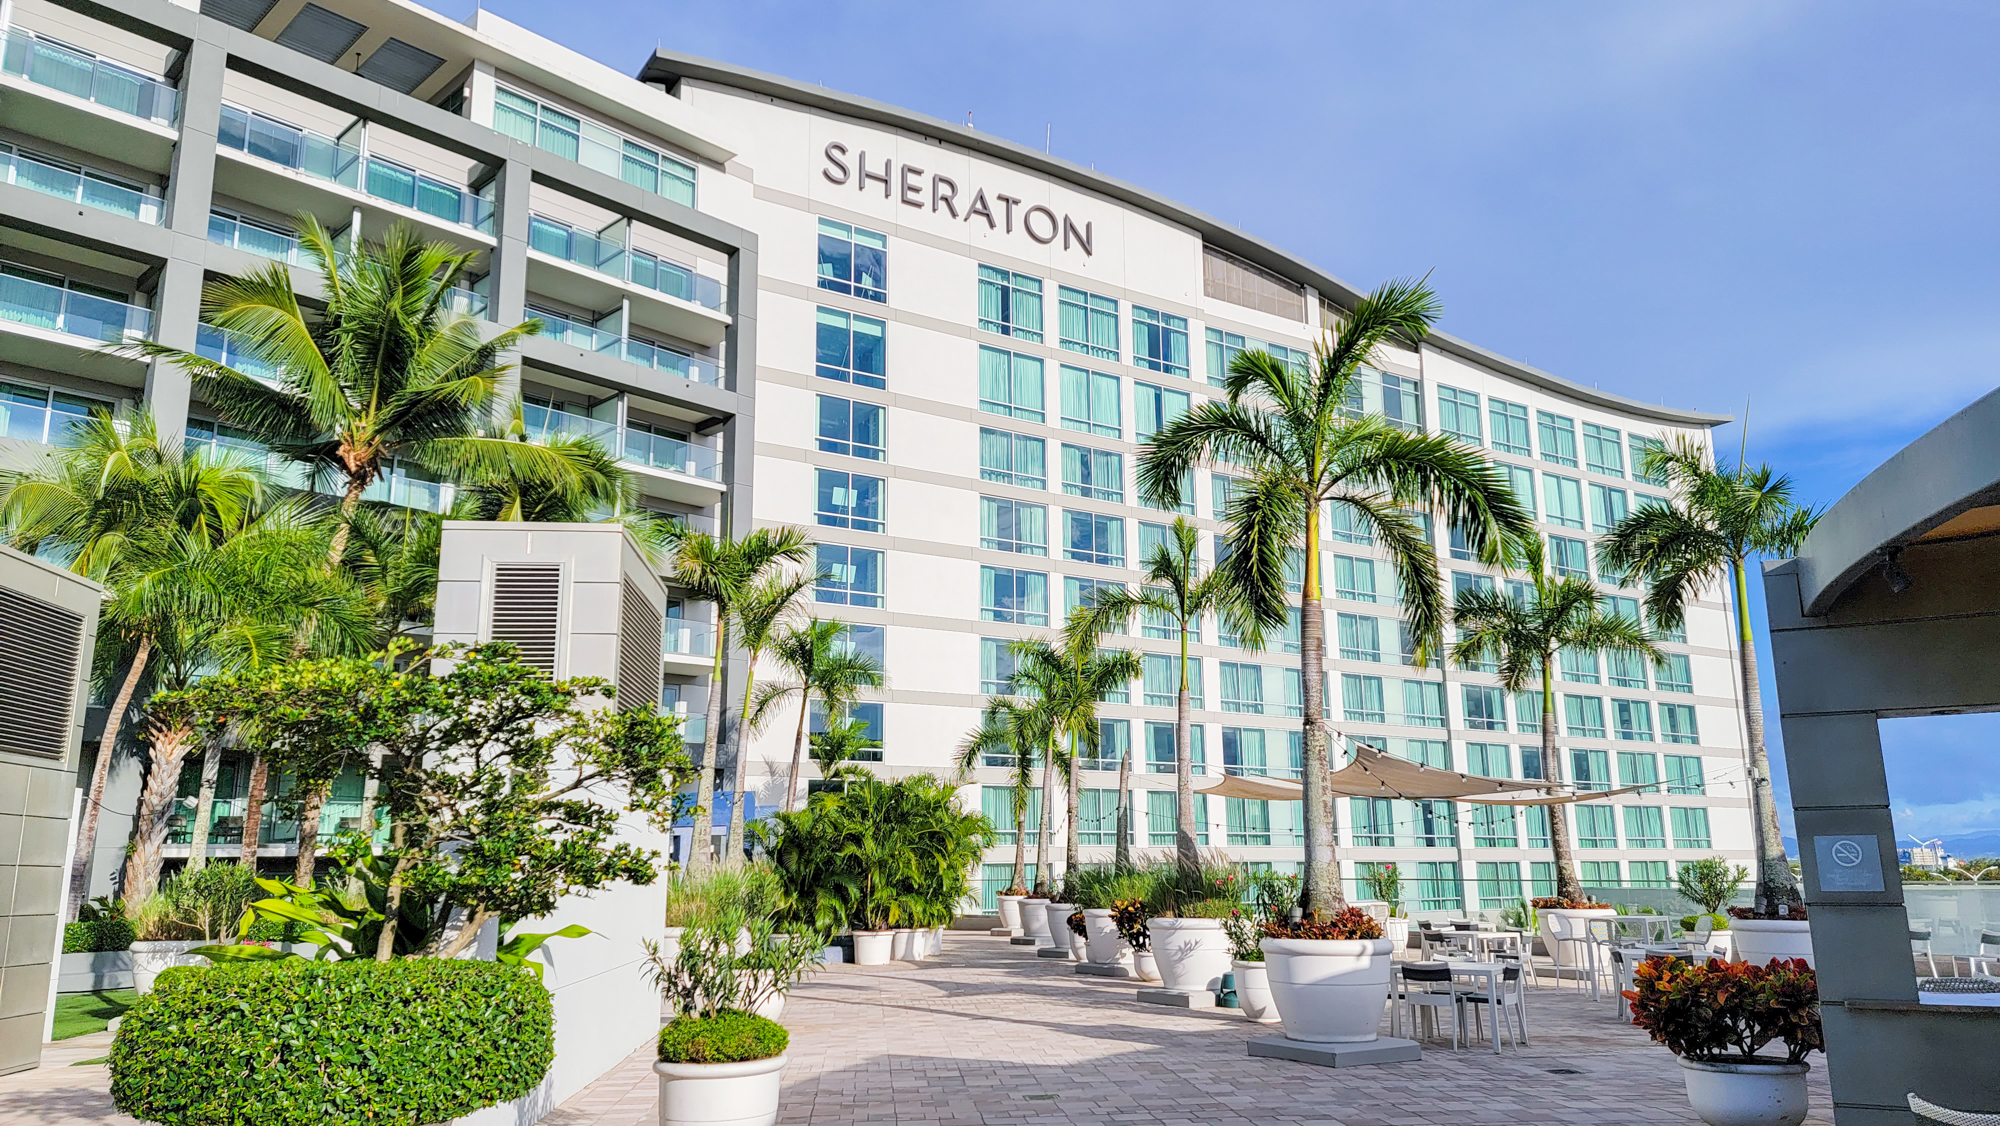 Sheraton Puerto Rico Hotel & Casino from the Pool Level